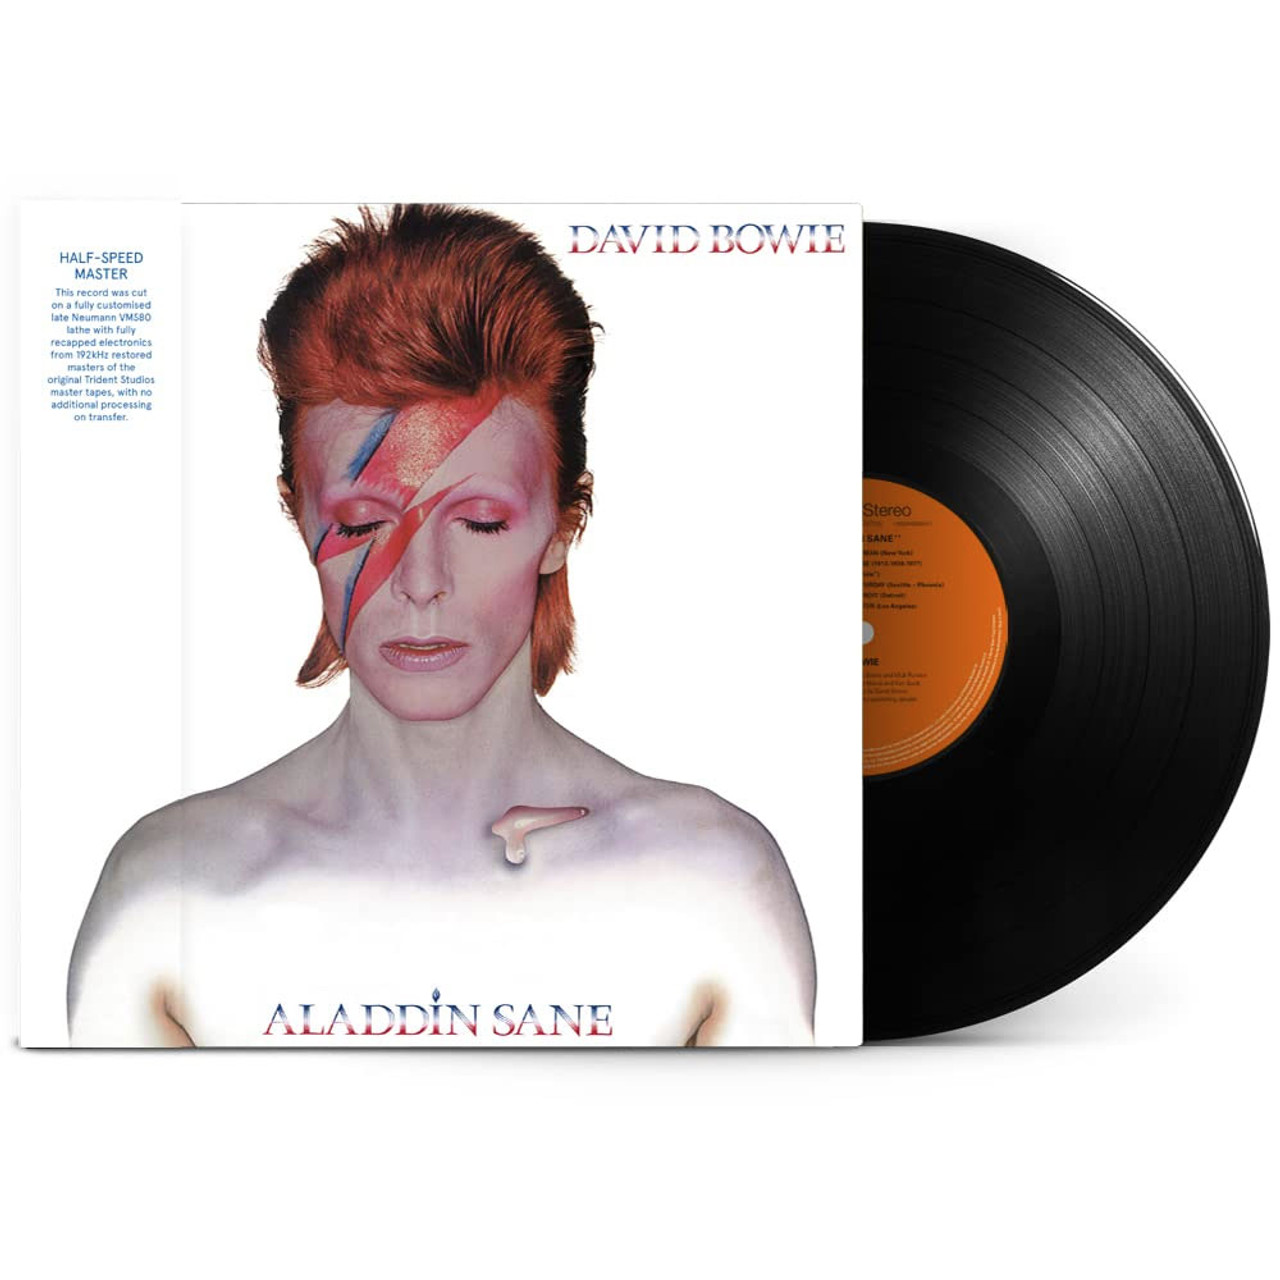 Виниловая пластинка Bowie, David, Aladdin Sane (Half Speed) (5054197183140) david bowie – aladdin sane 2013 remaster [half speed] lp